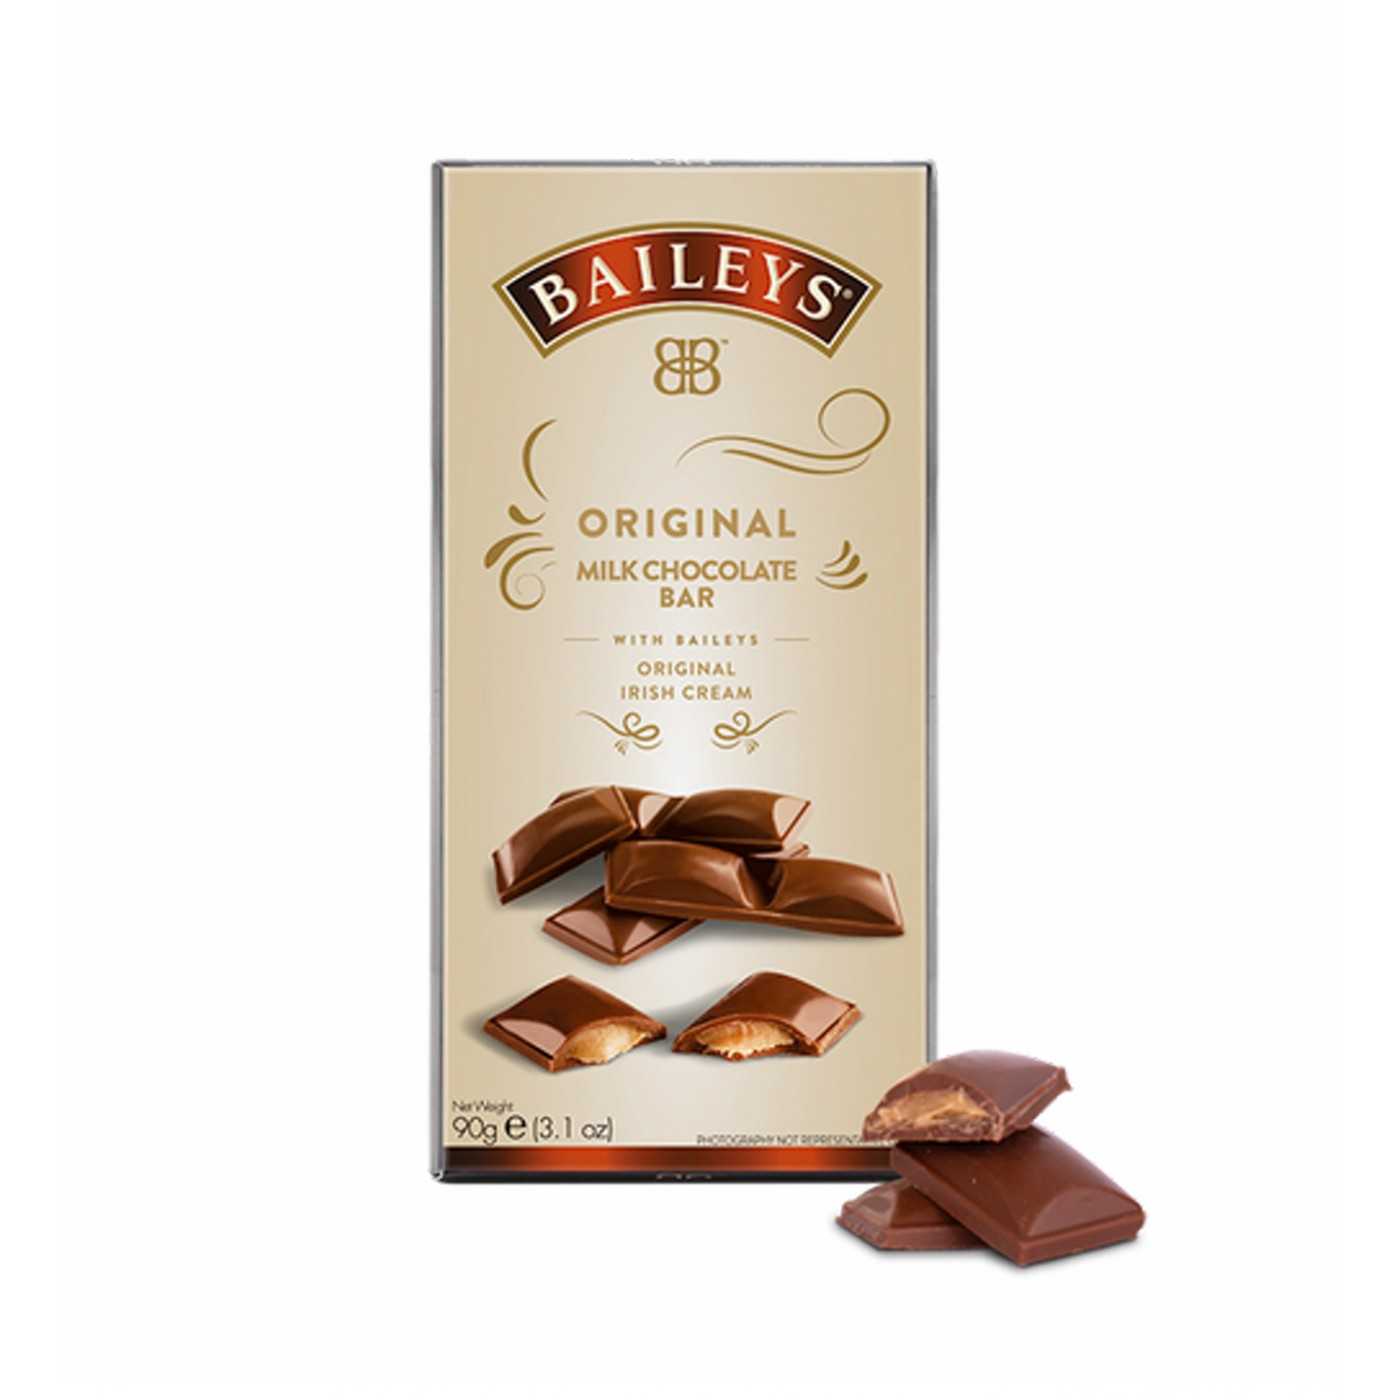 Baileys Original Truffle bar 90g15st